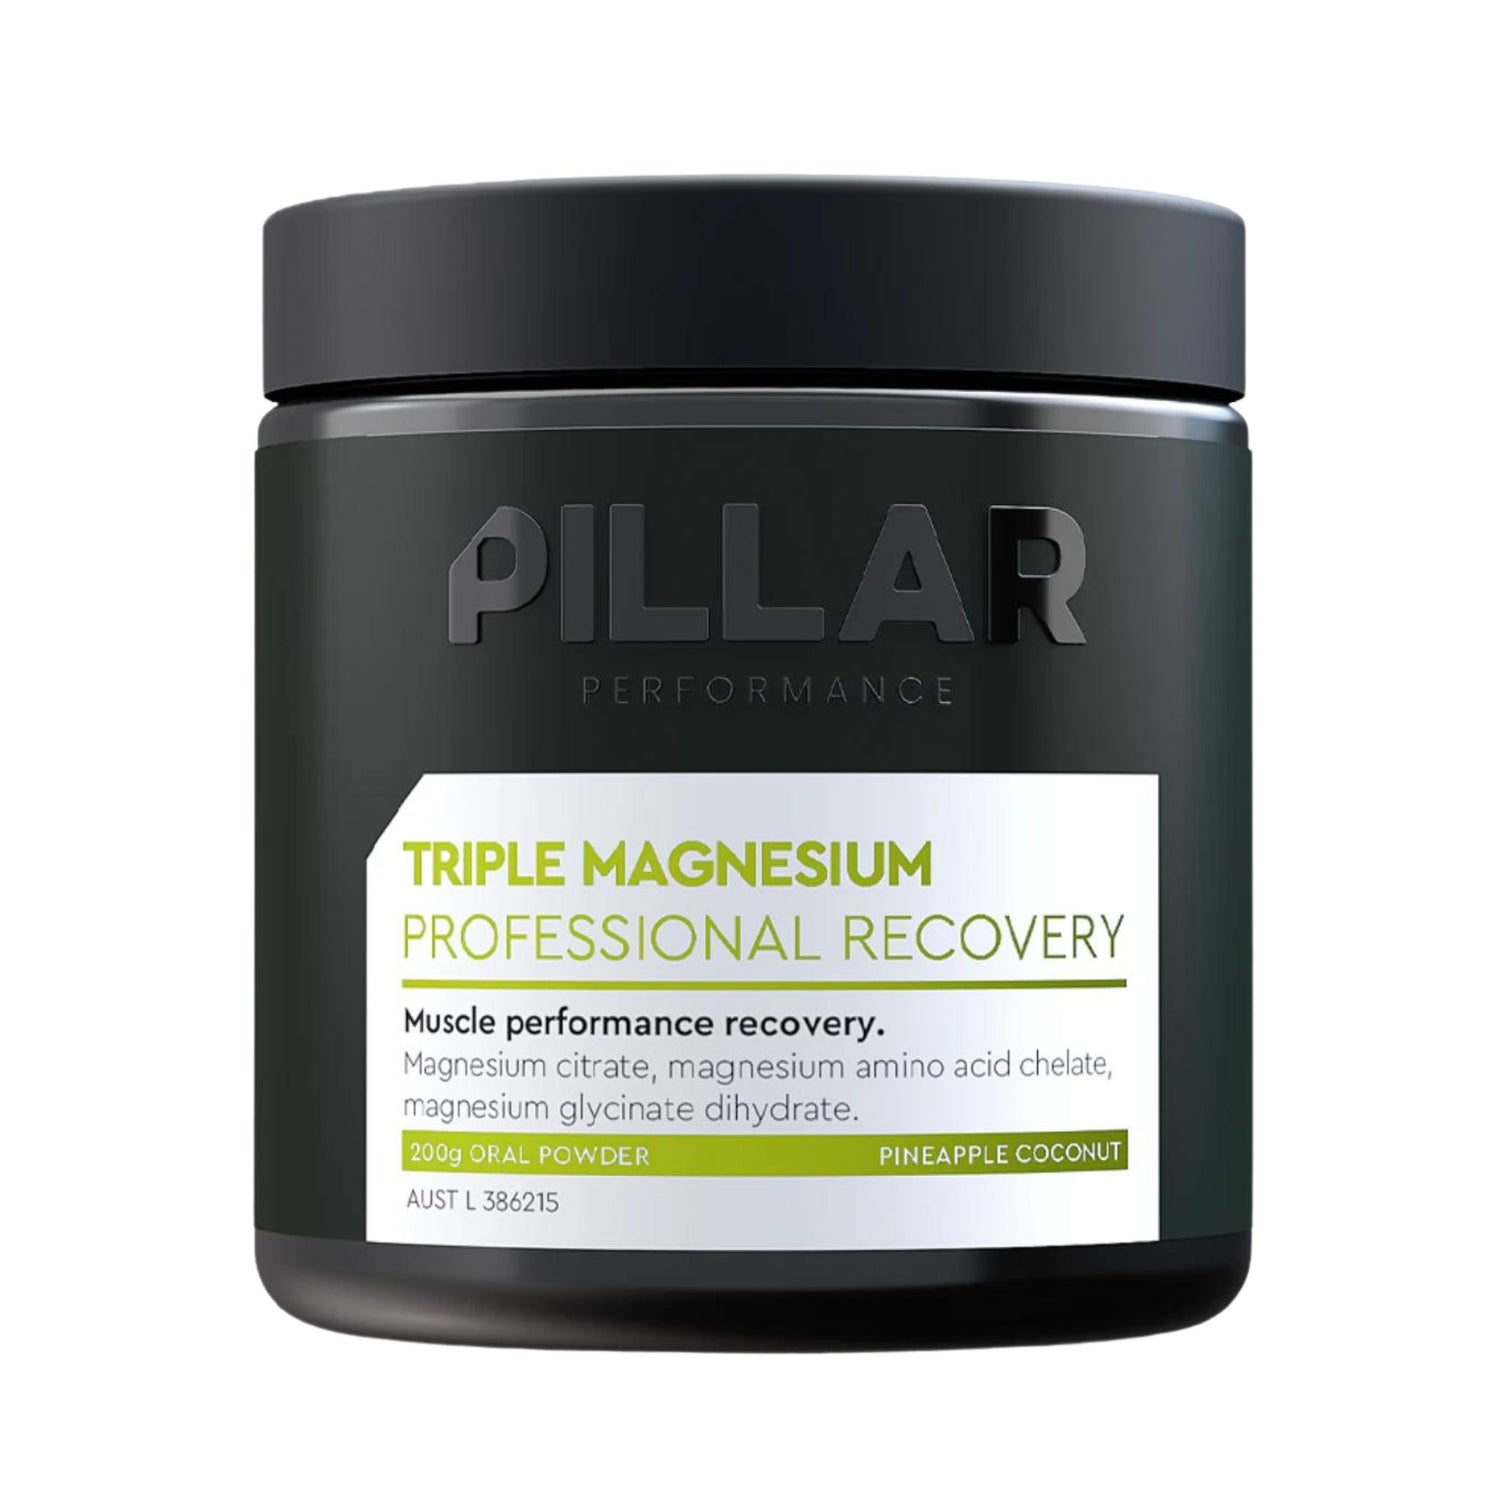 Pillar Performance Recovery Triple Magnesium Powder